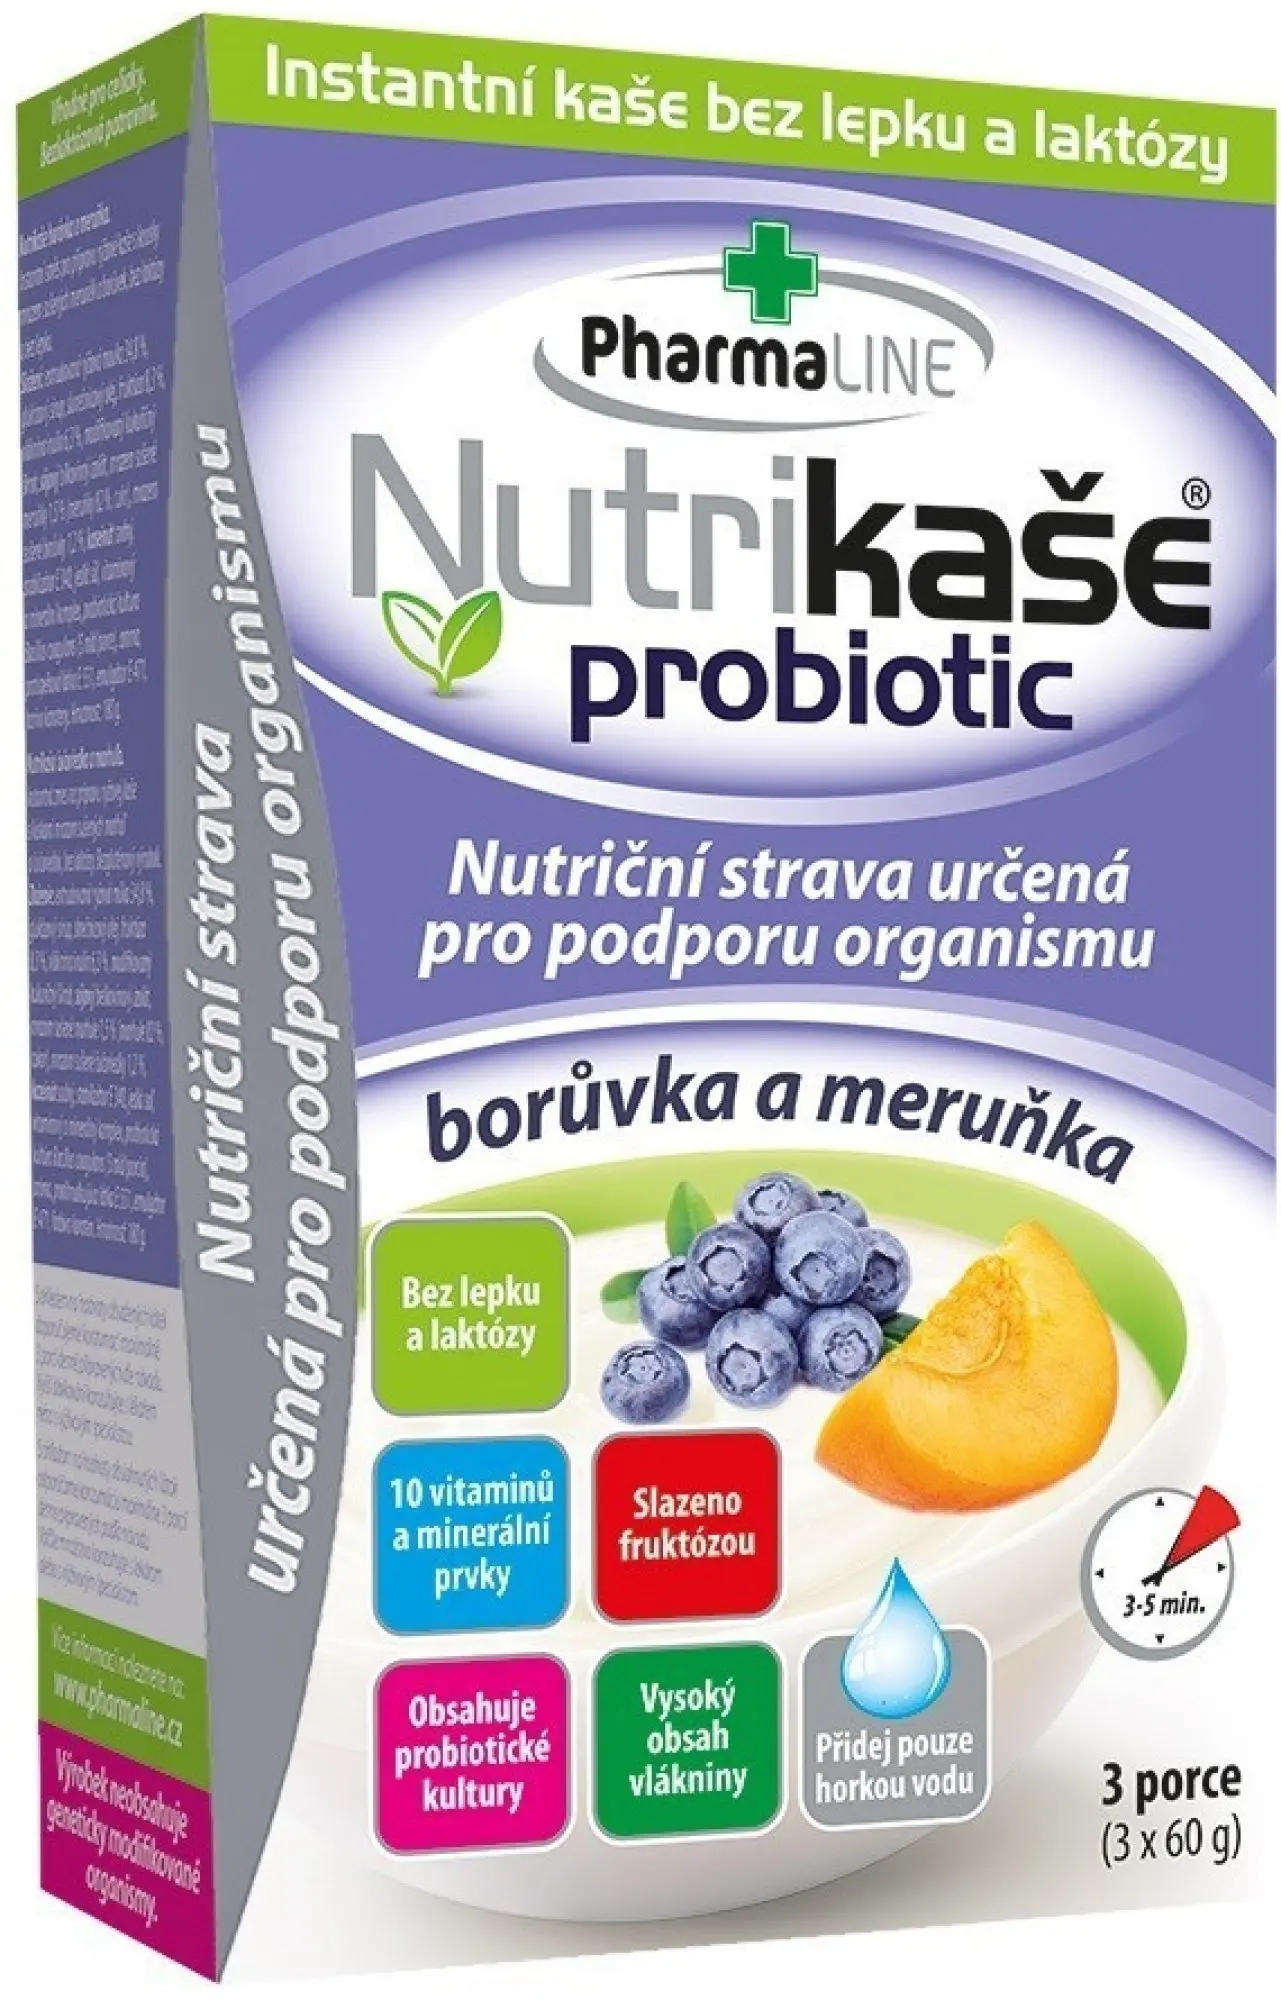 Nutrikaše probiotic meruňka a borůvka 180 g